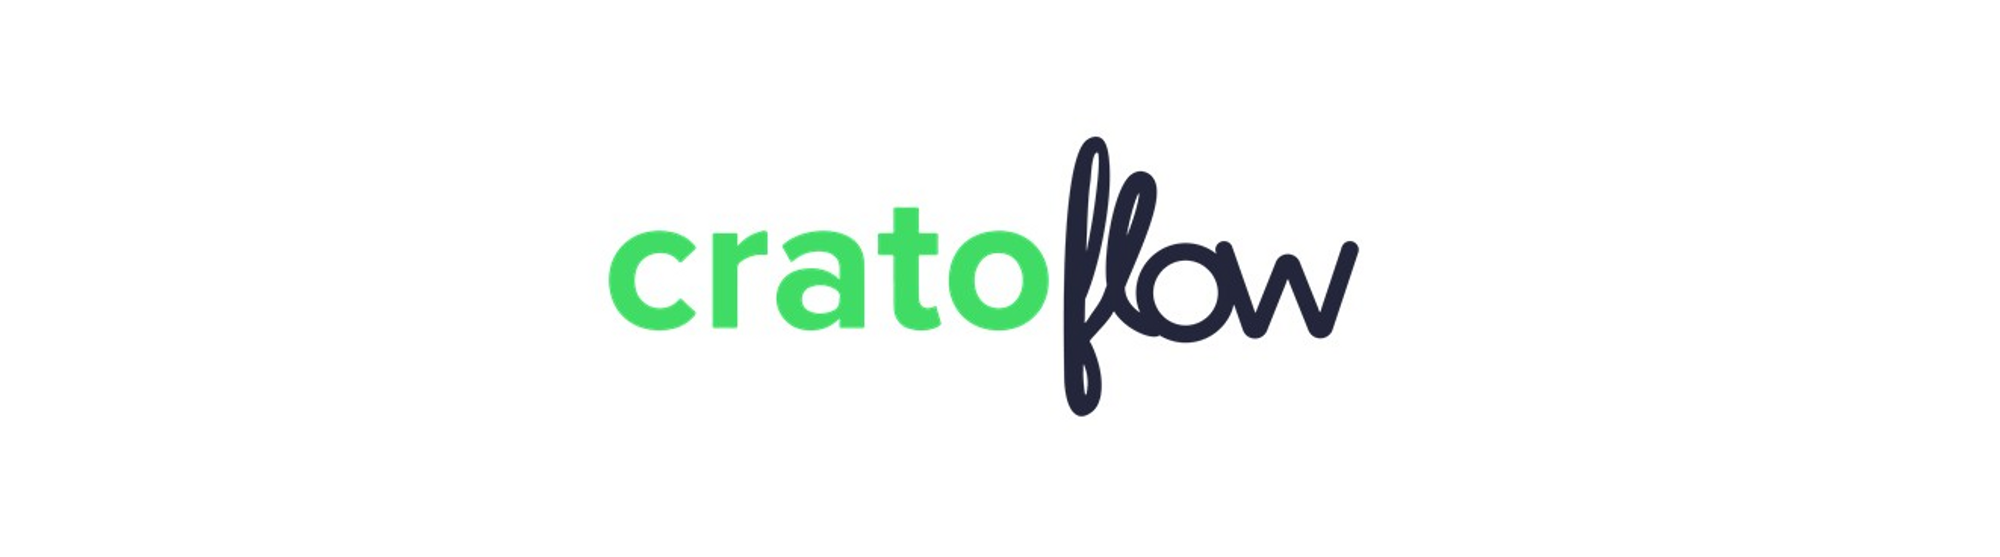 Cratoflow Cover Image